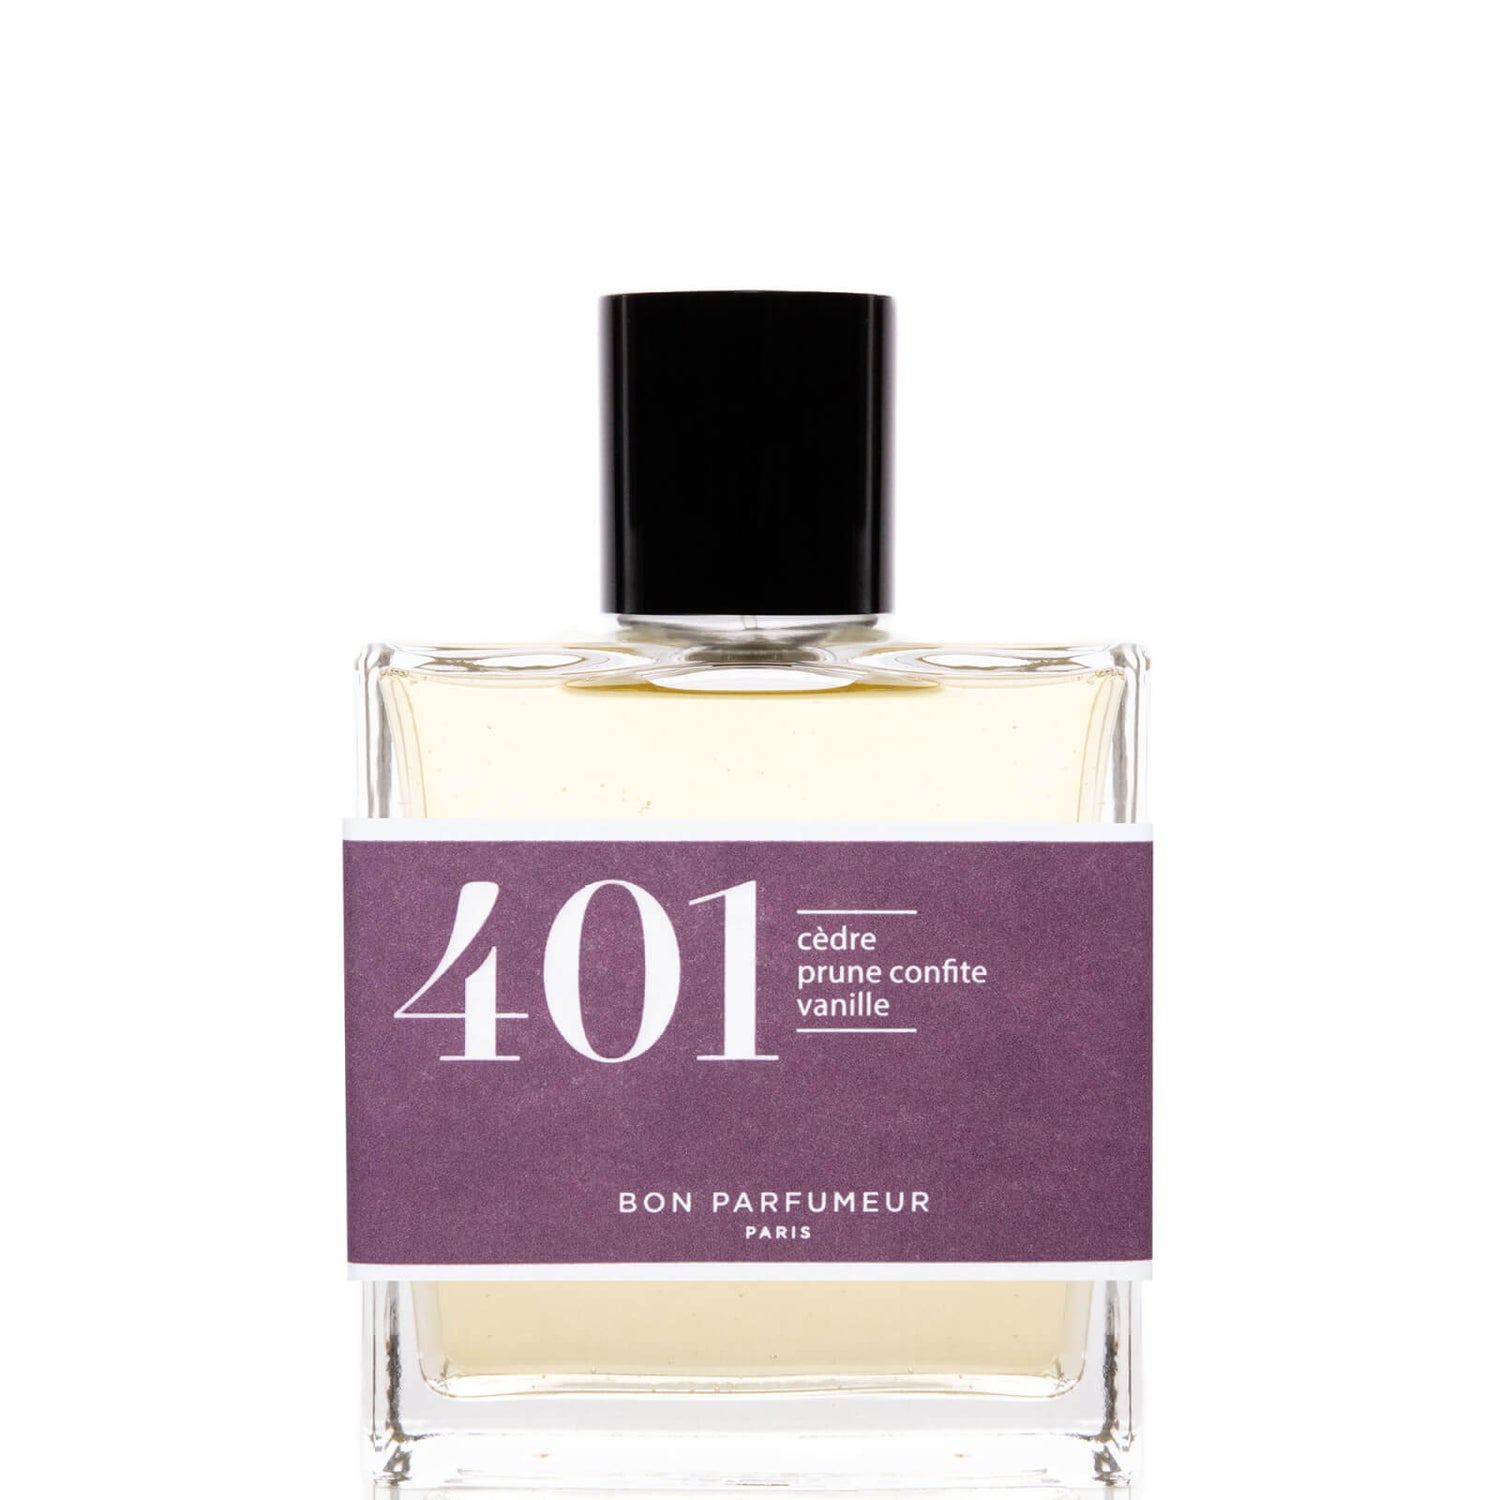 Bon Parfumeur 401 Cedar Gekonfijte Pruim Vanille Eau de Parfum - 100ml